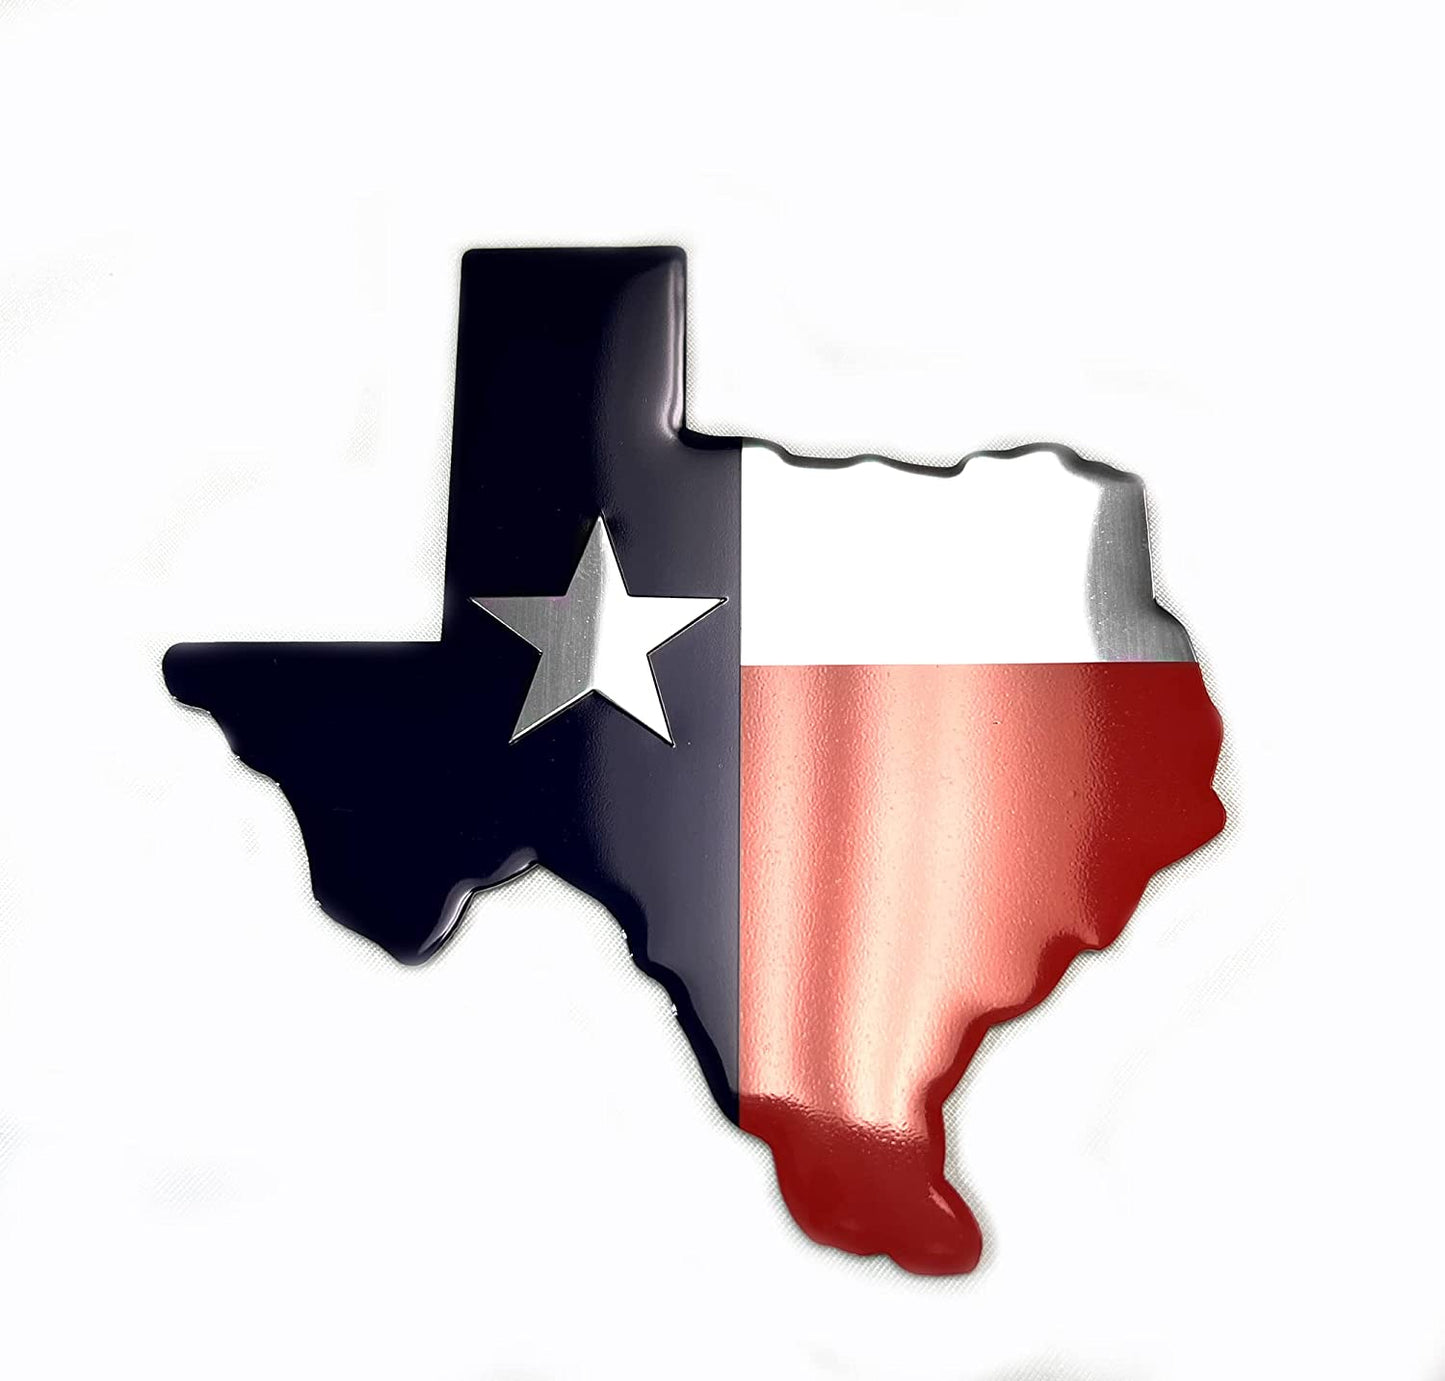 Texas State Flag Metal Flag Auto Fender Emblem for Cars Trucks (4"x3", Color)